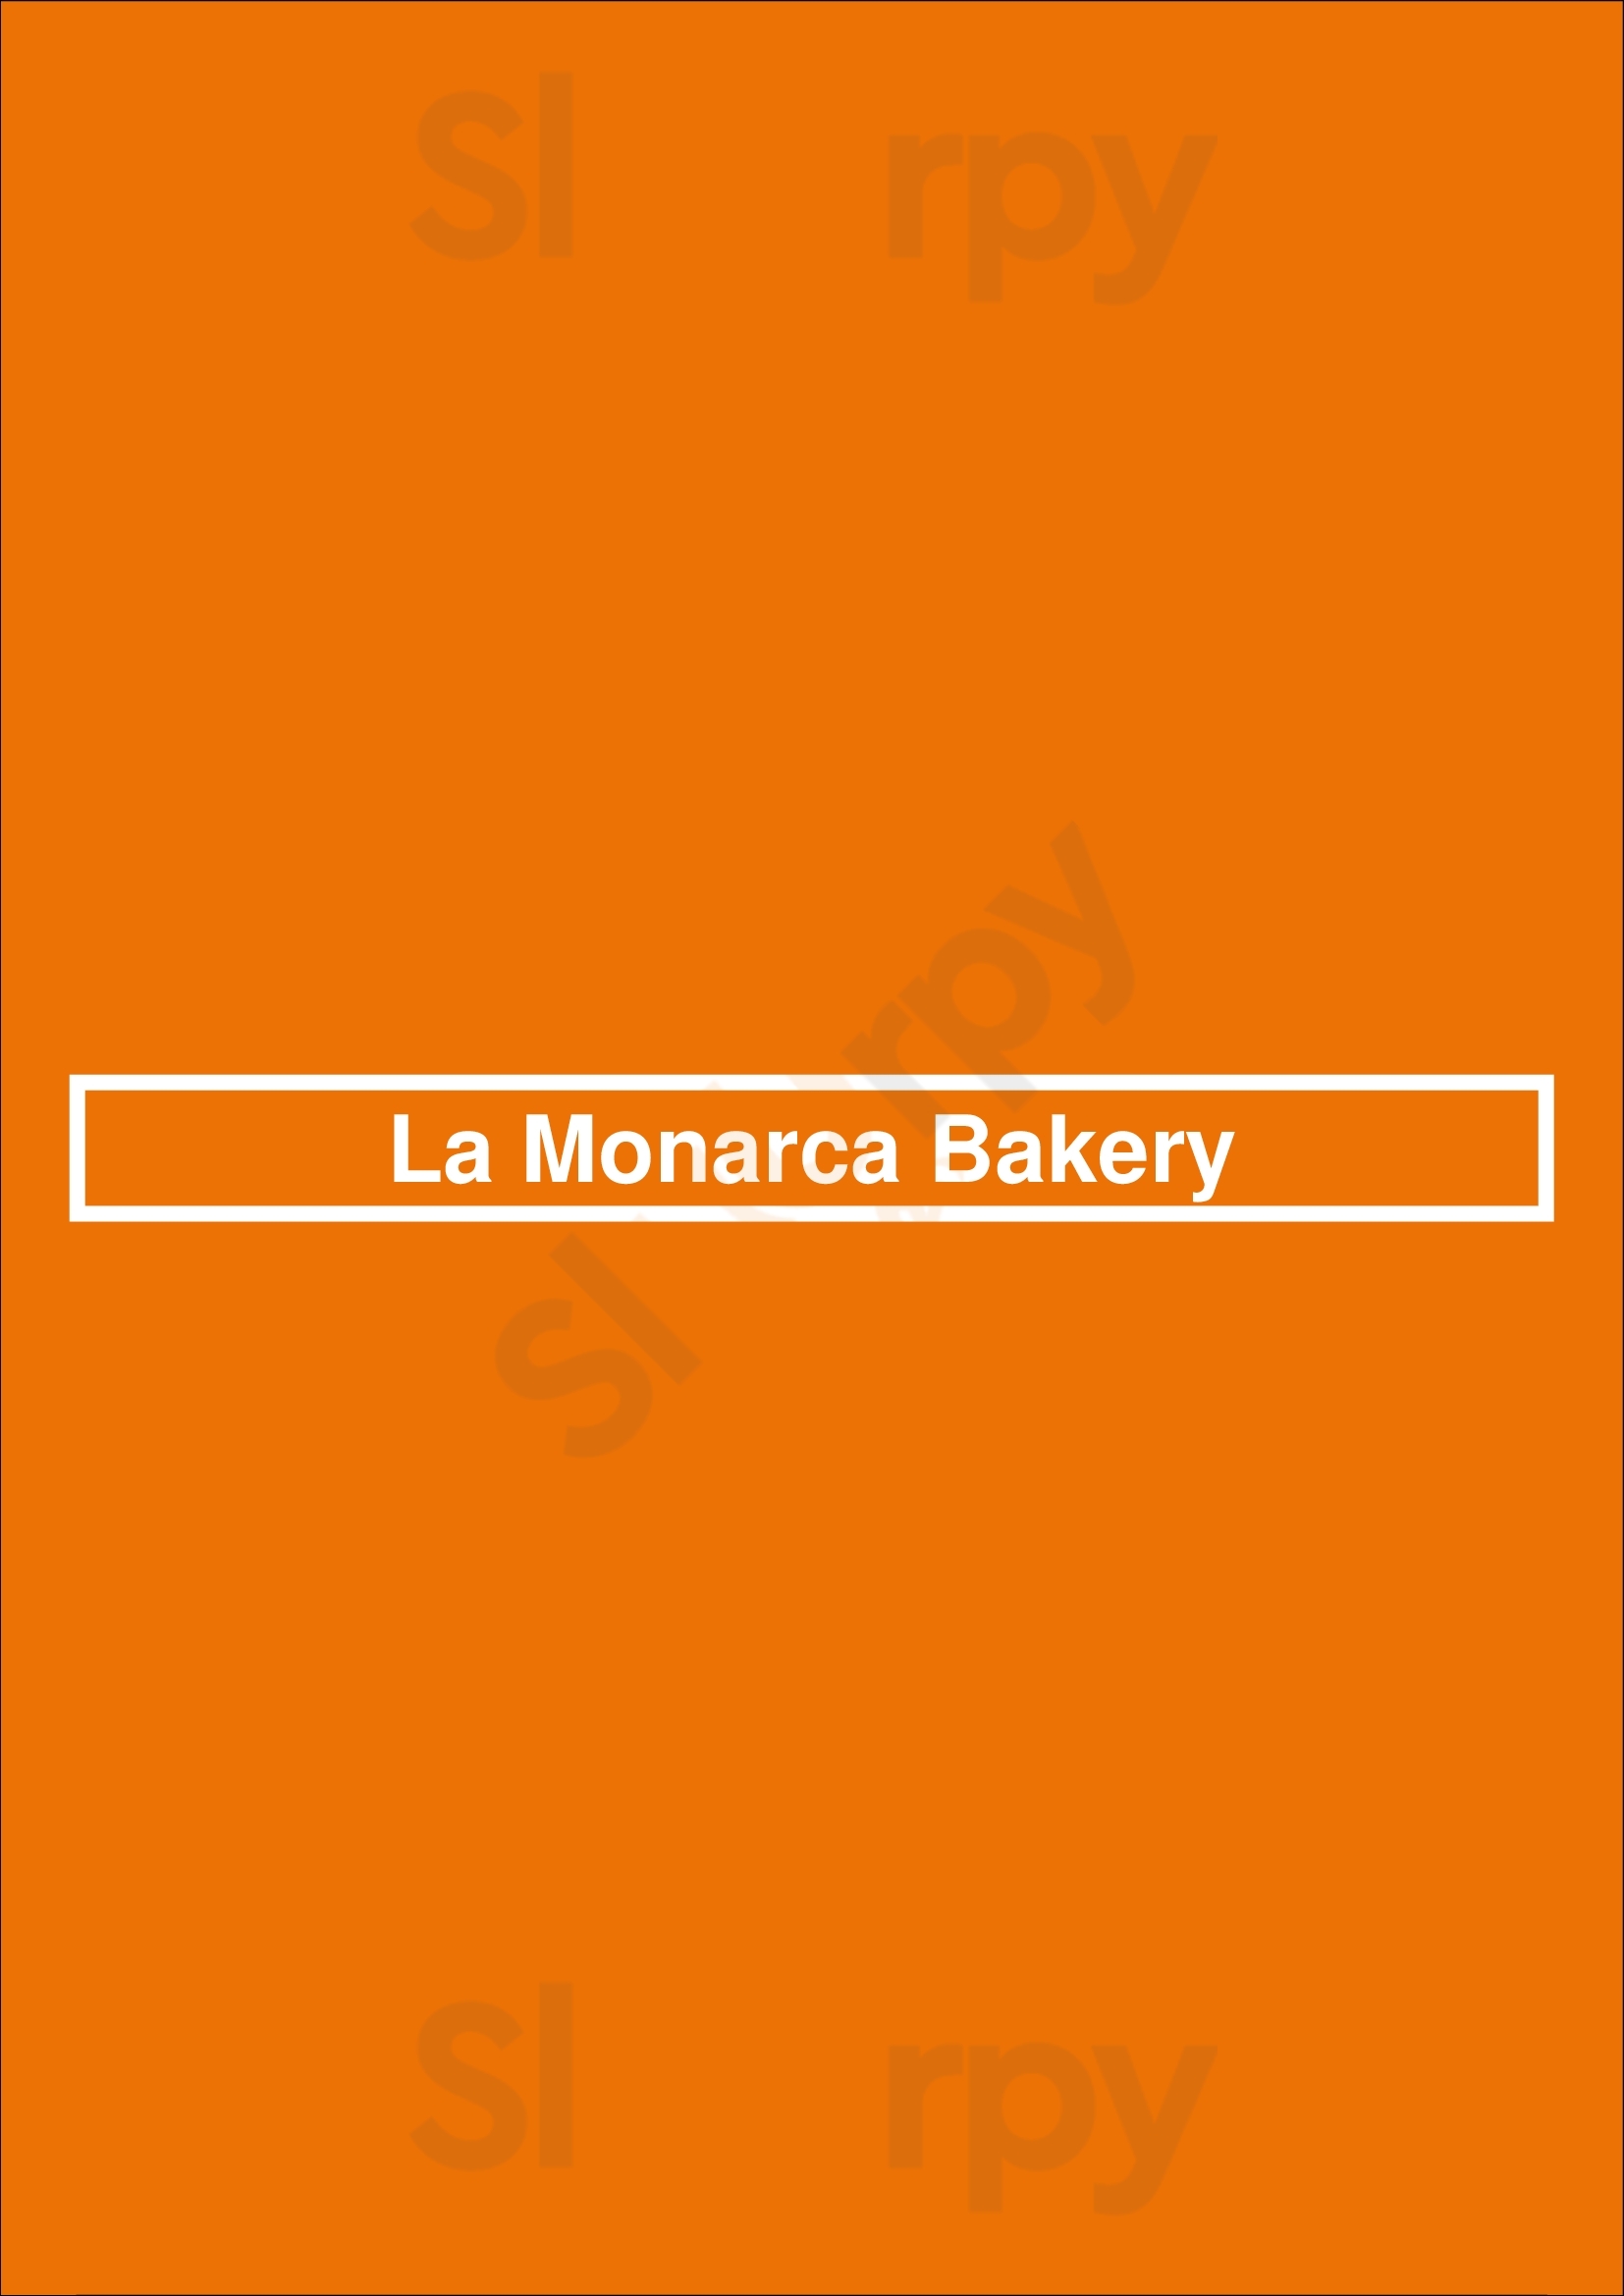 La Monarca Bakery Santa Monica Menu - 1